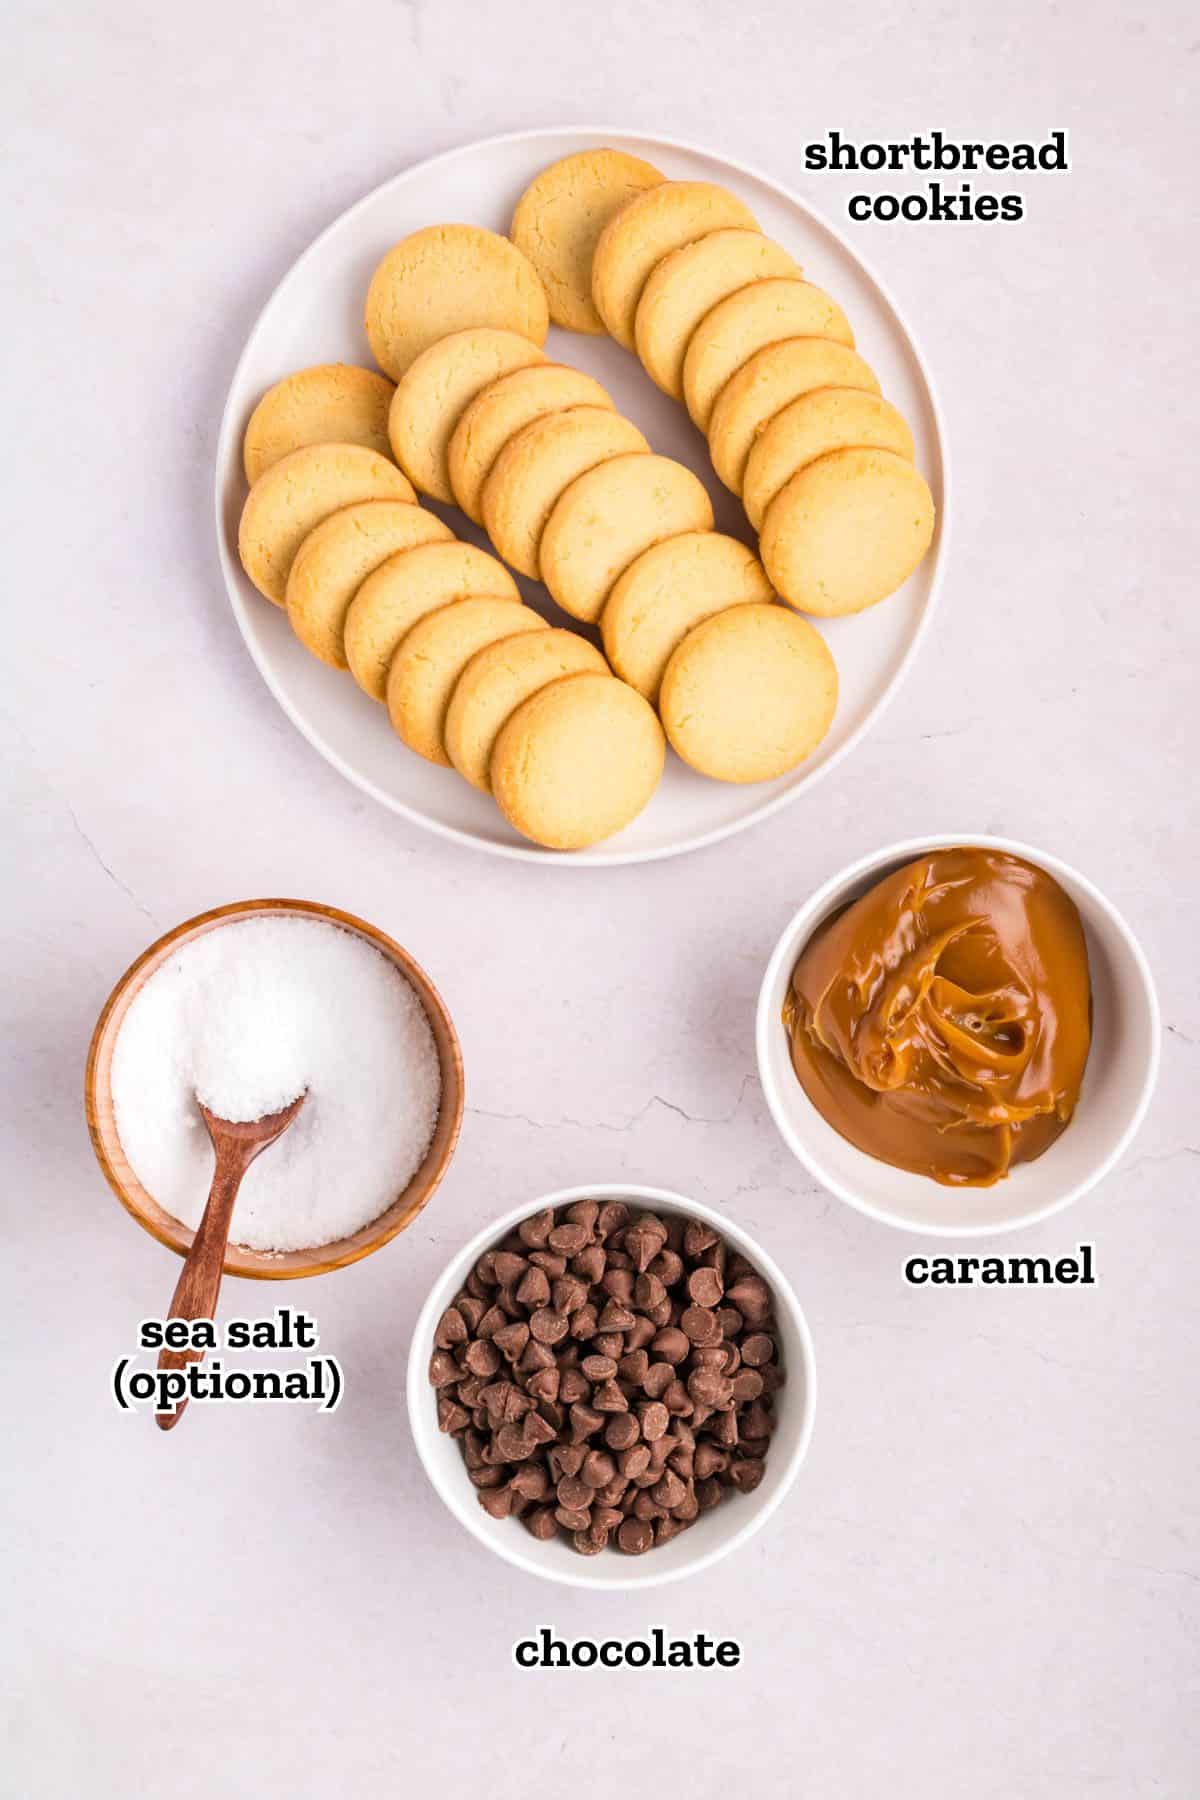 Labeled ingredients needed to make twix cookies.